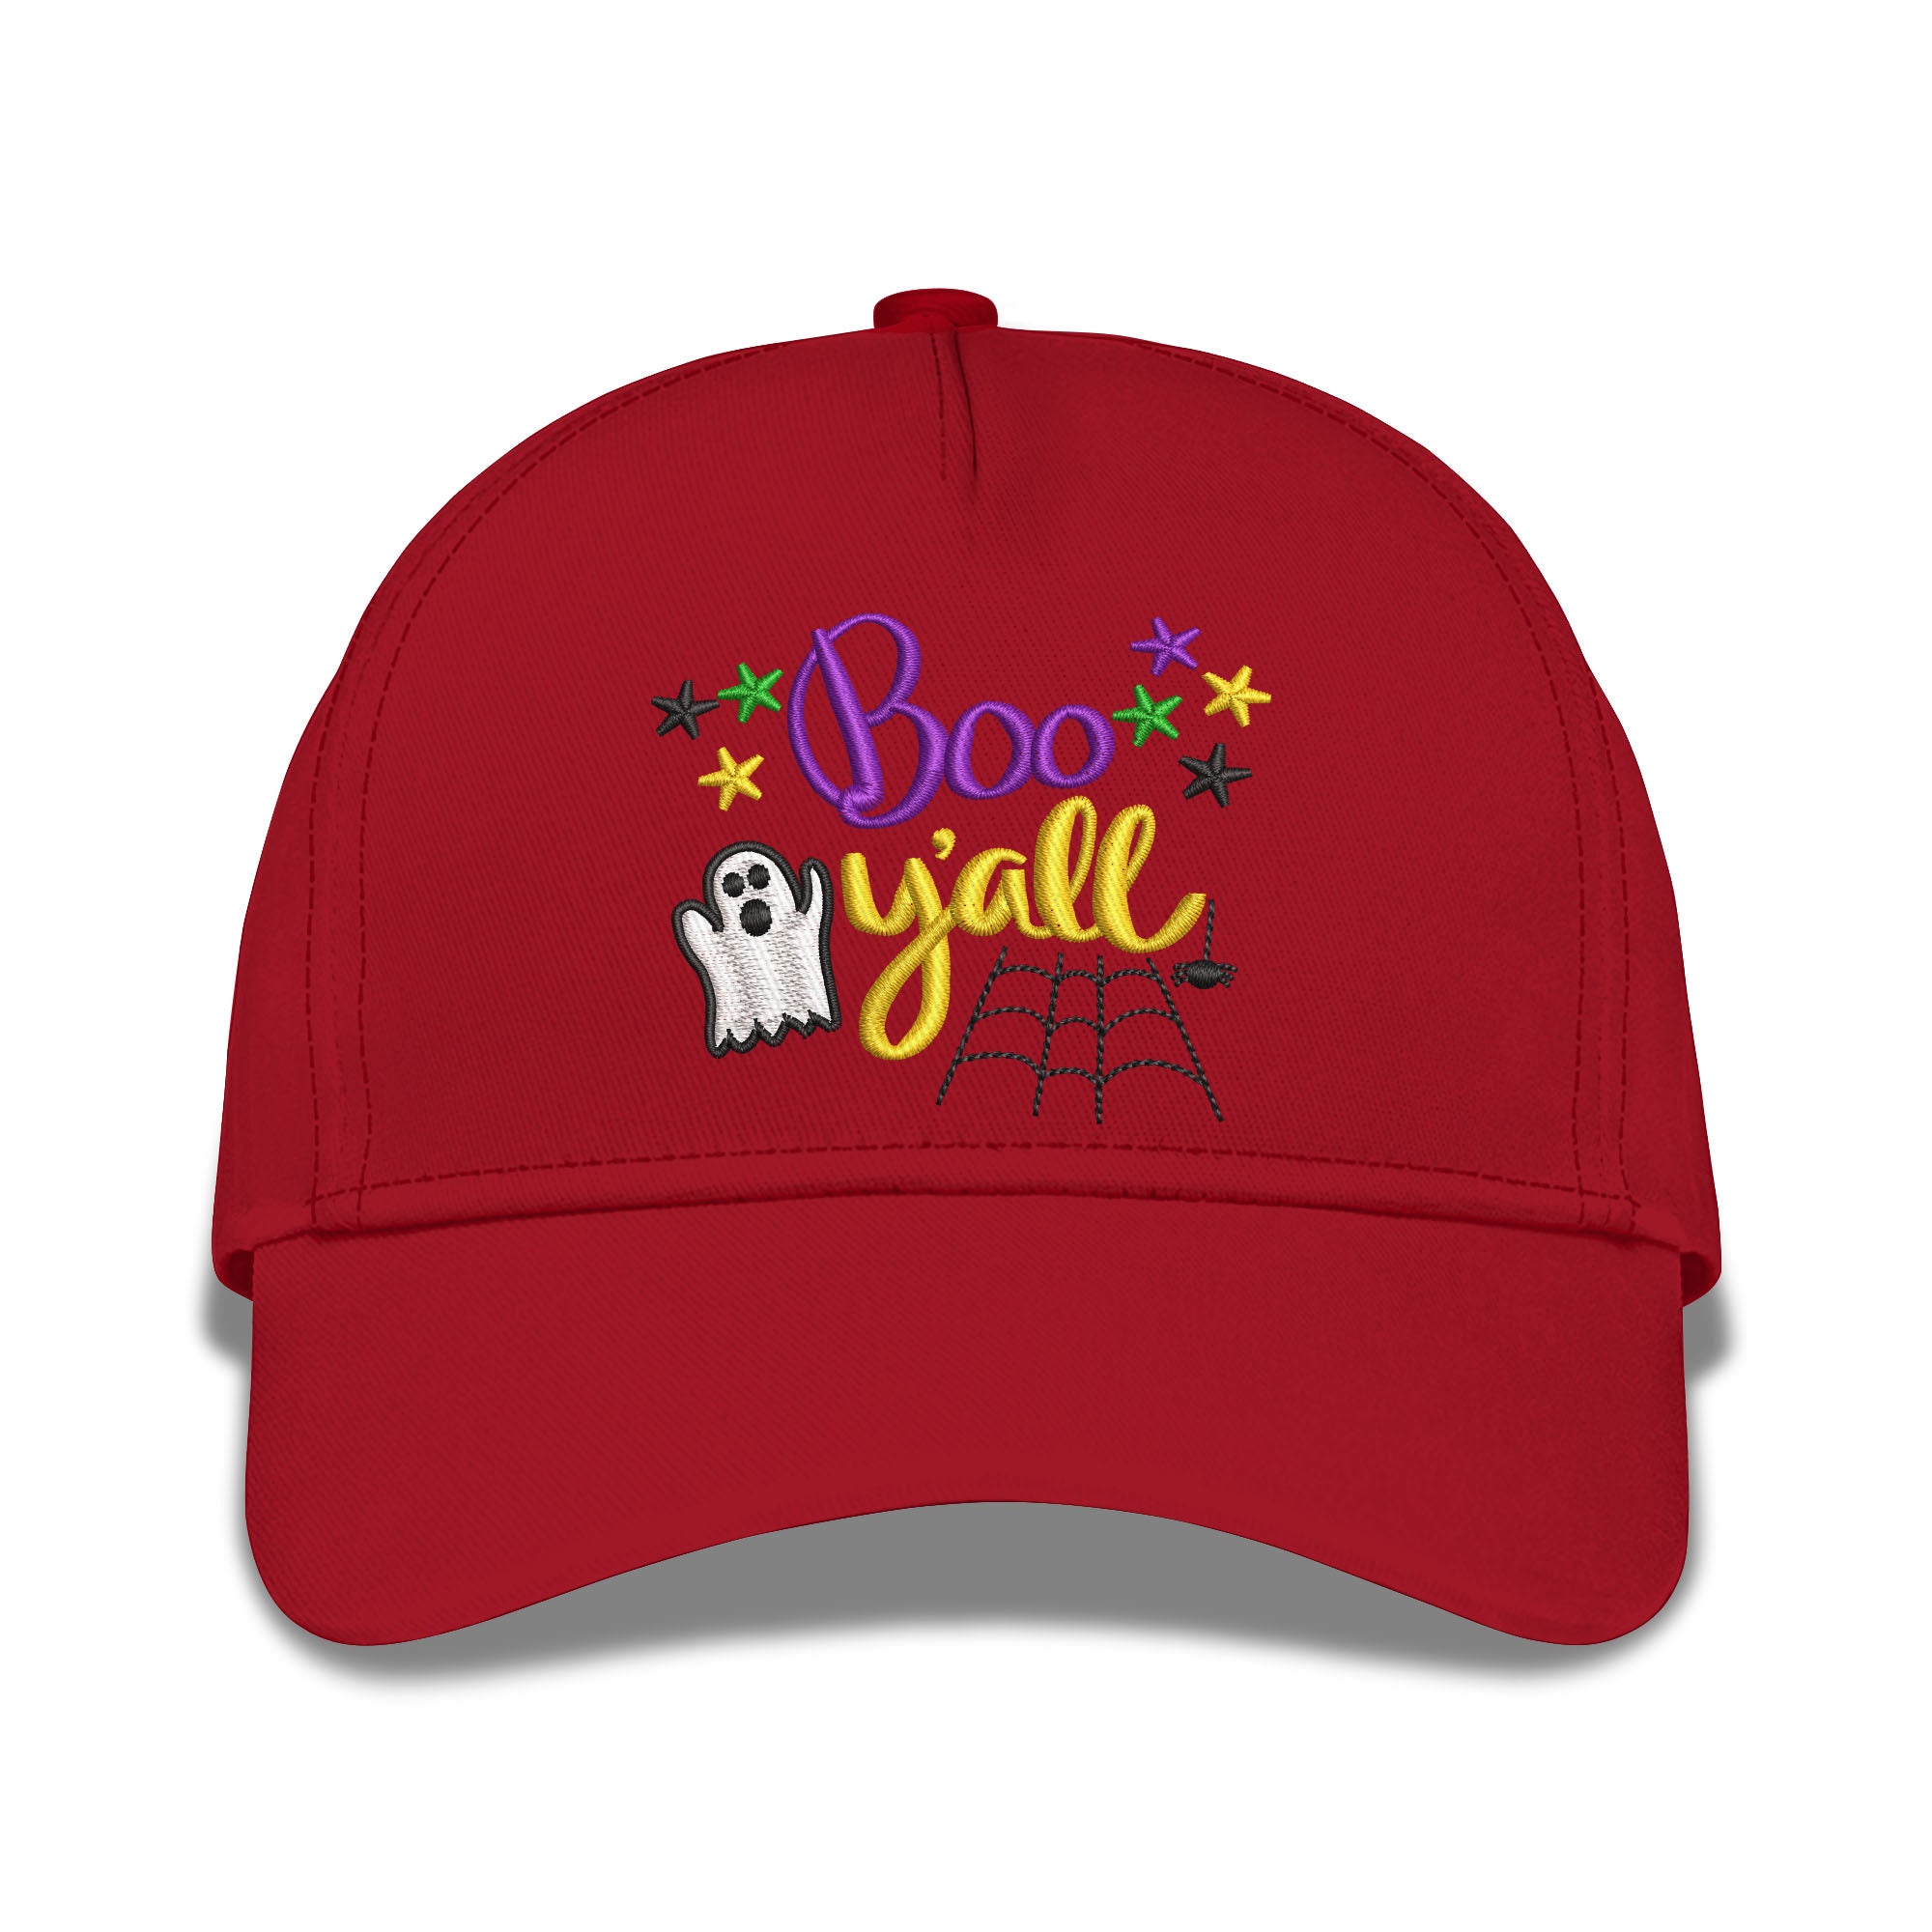 Boo Yall Embroidered Baseball Caps